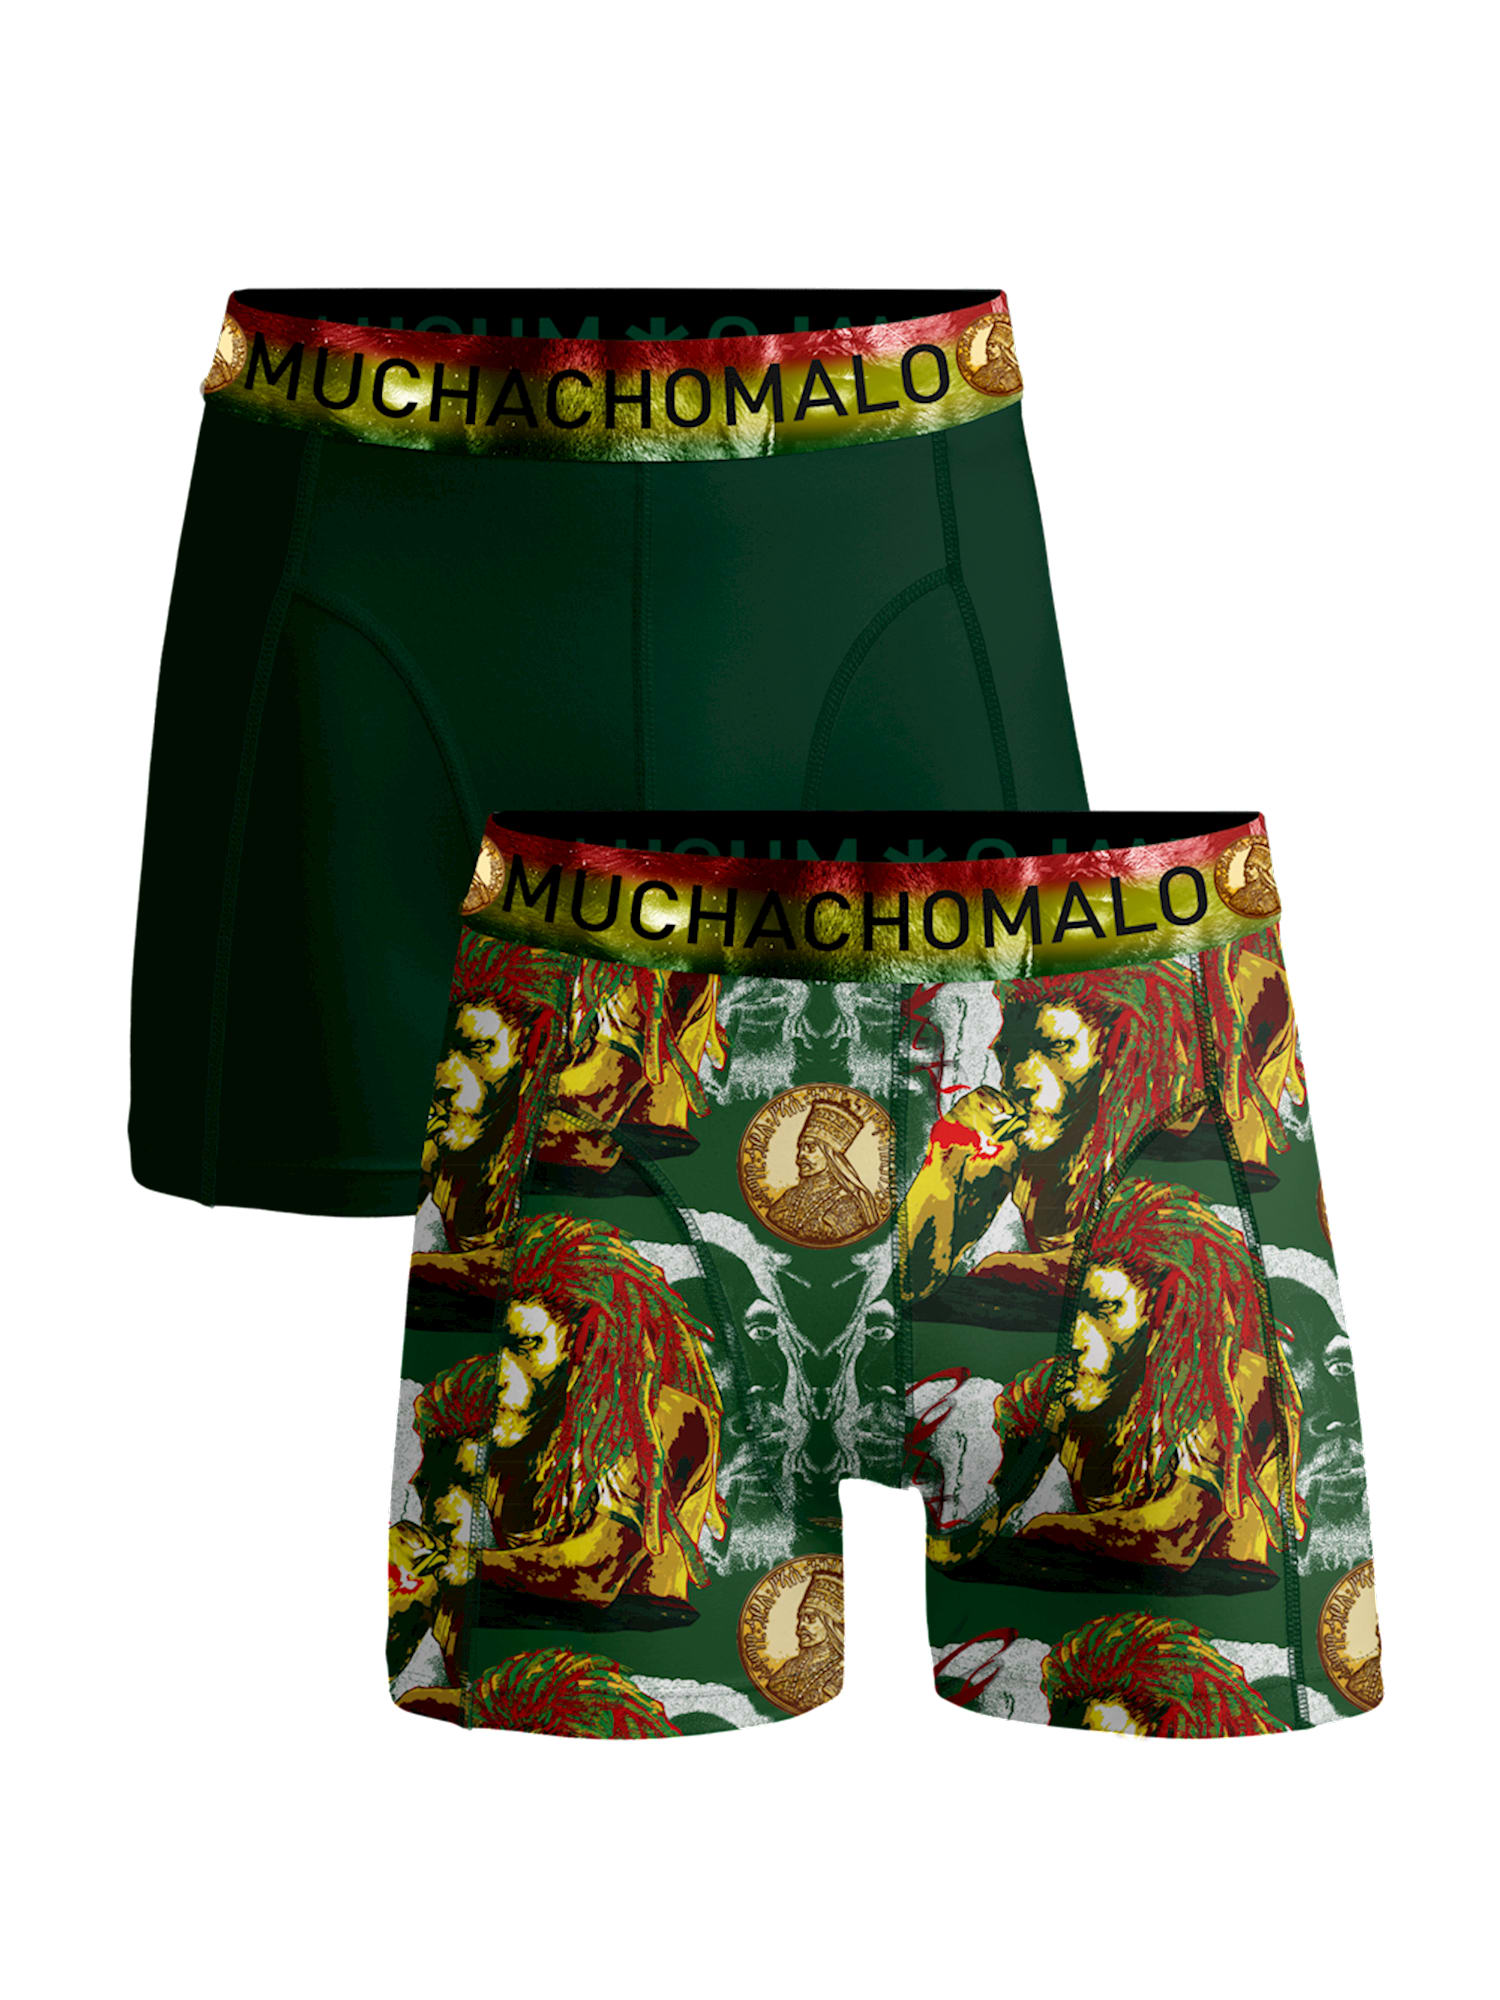 Боксеры Muchachomalo 2er-Set: Boxershorts, цвет Multicolor/Green боксеры muchachomalo 5er set boxershorts цвет black blue blue green green